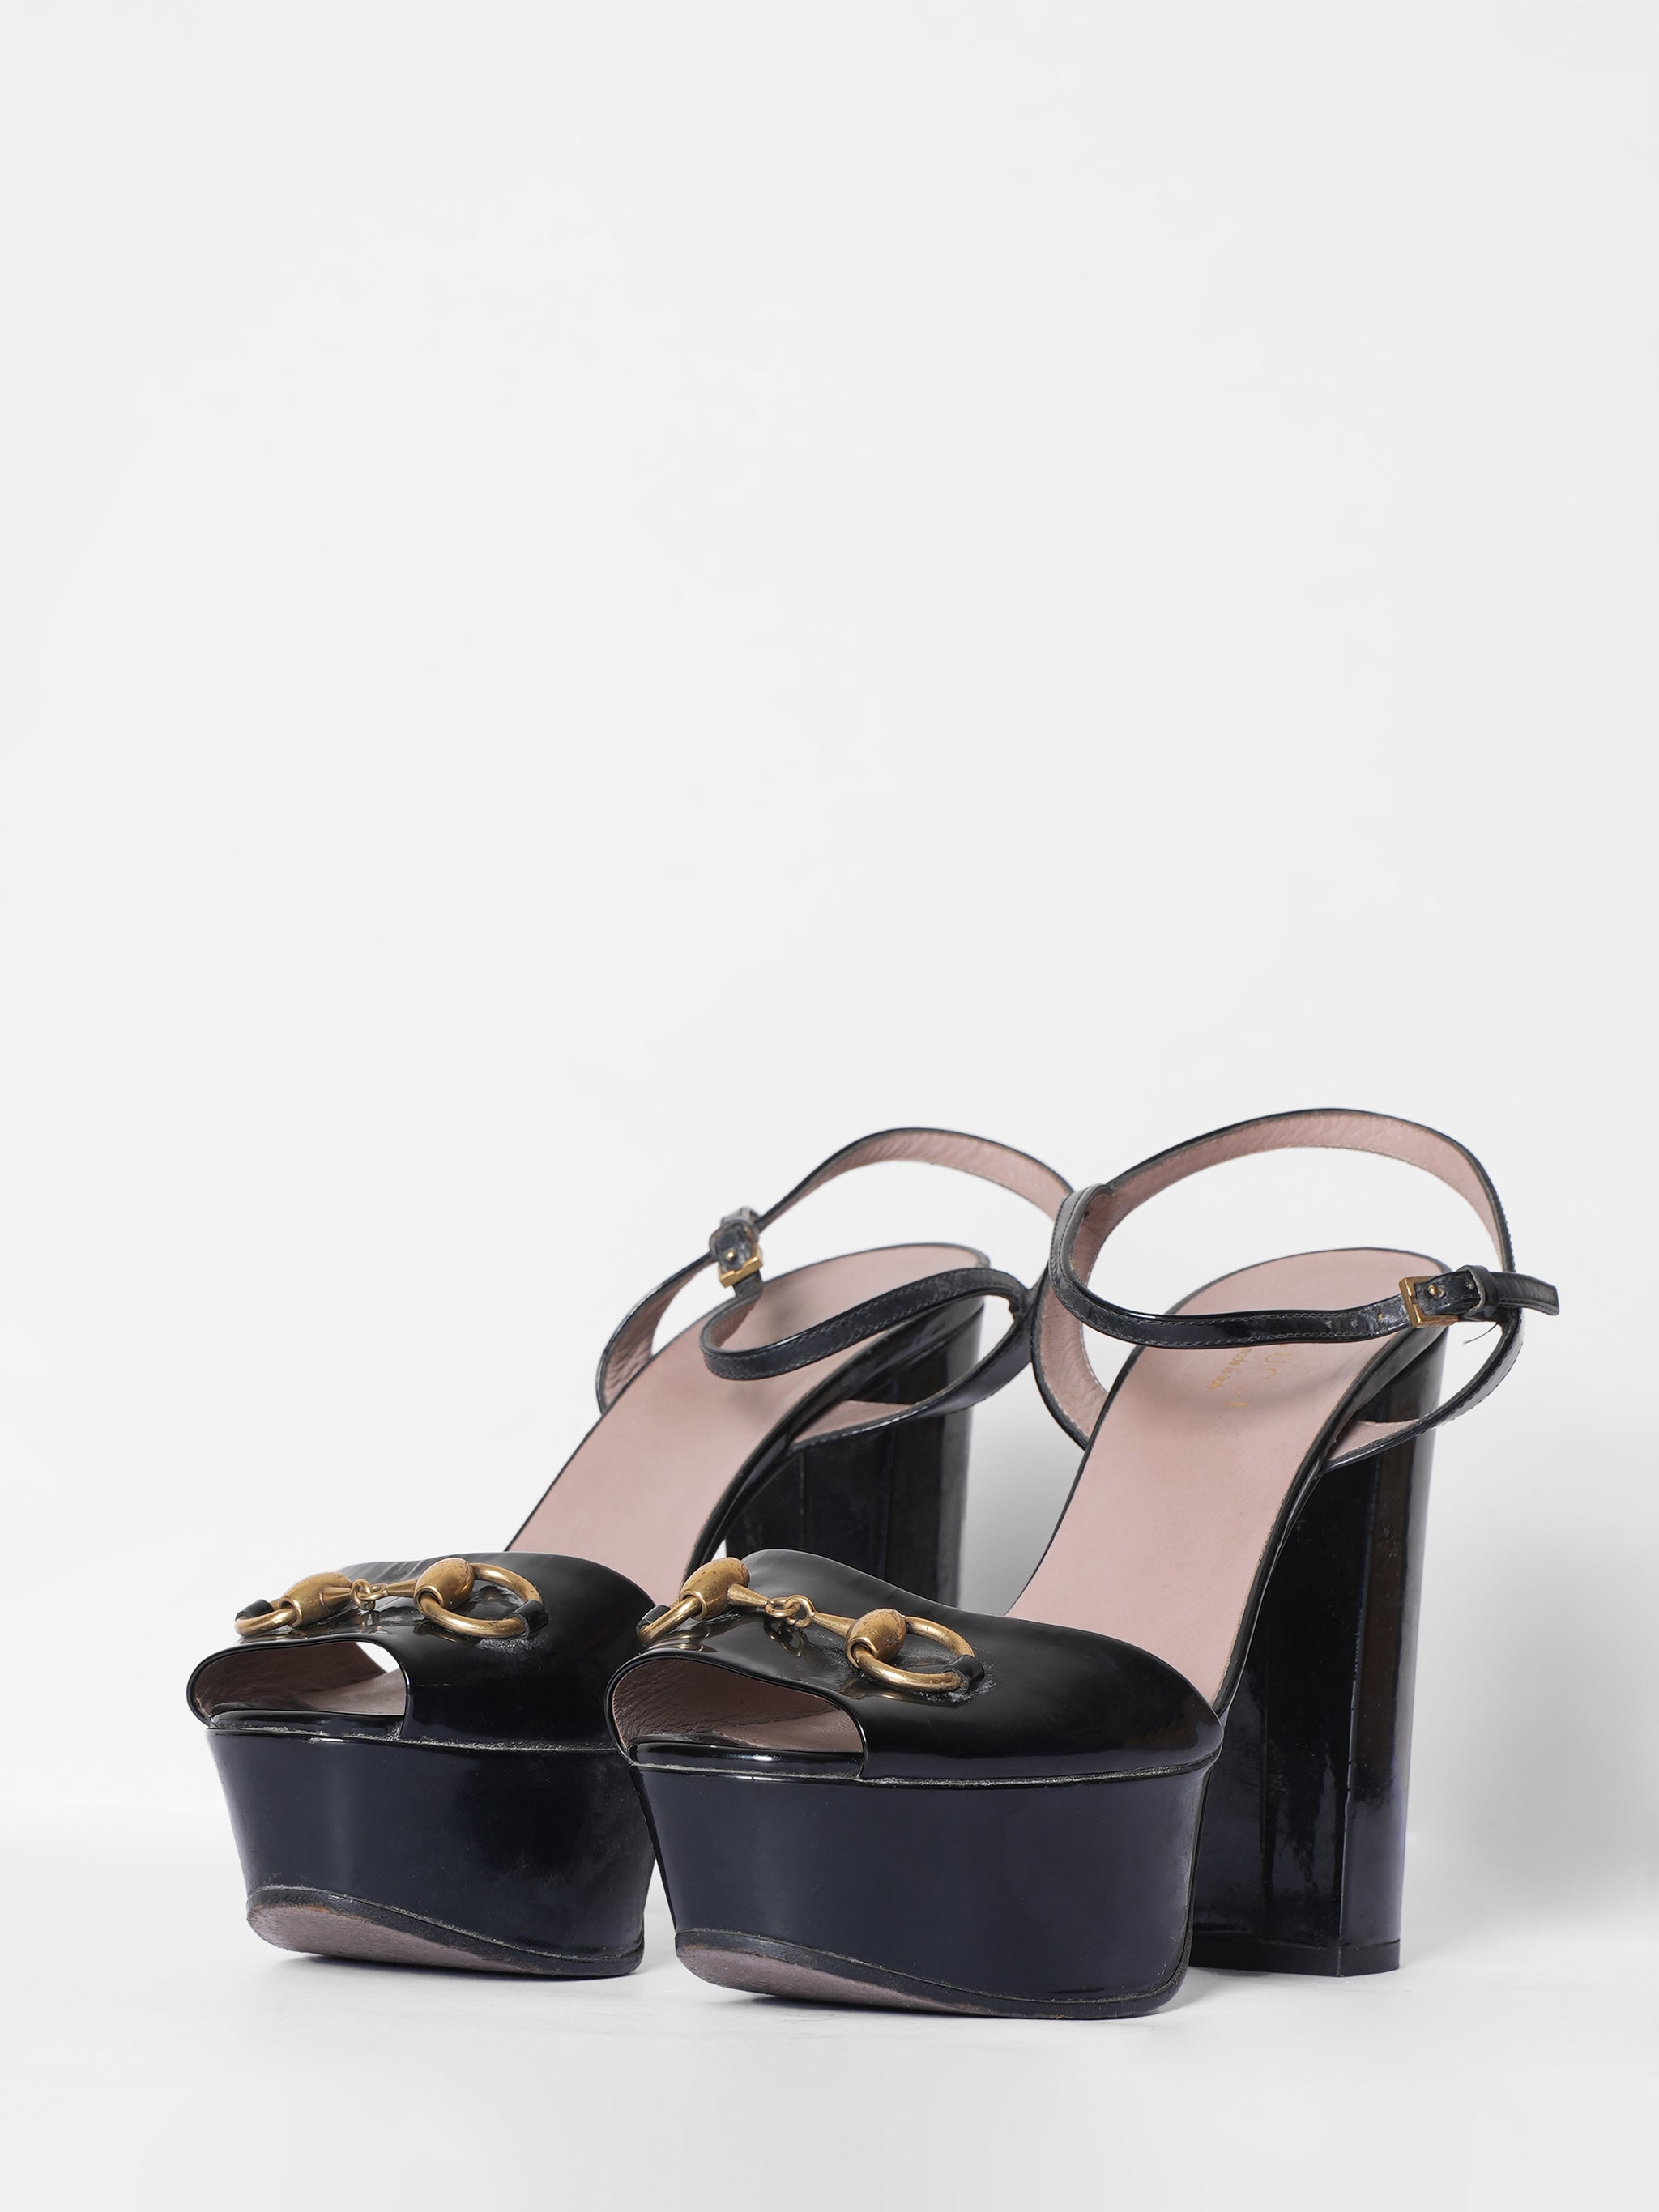 Gucci Black Patent Leather Horsebit Peep Toe Platform Sandals